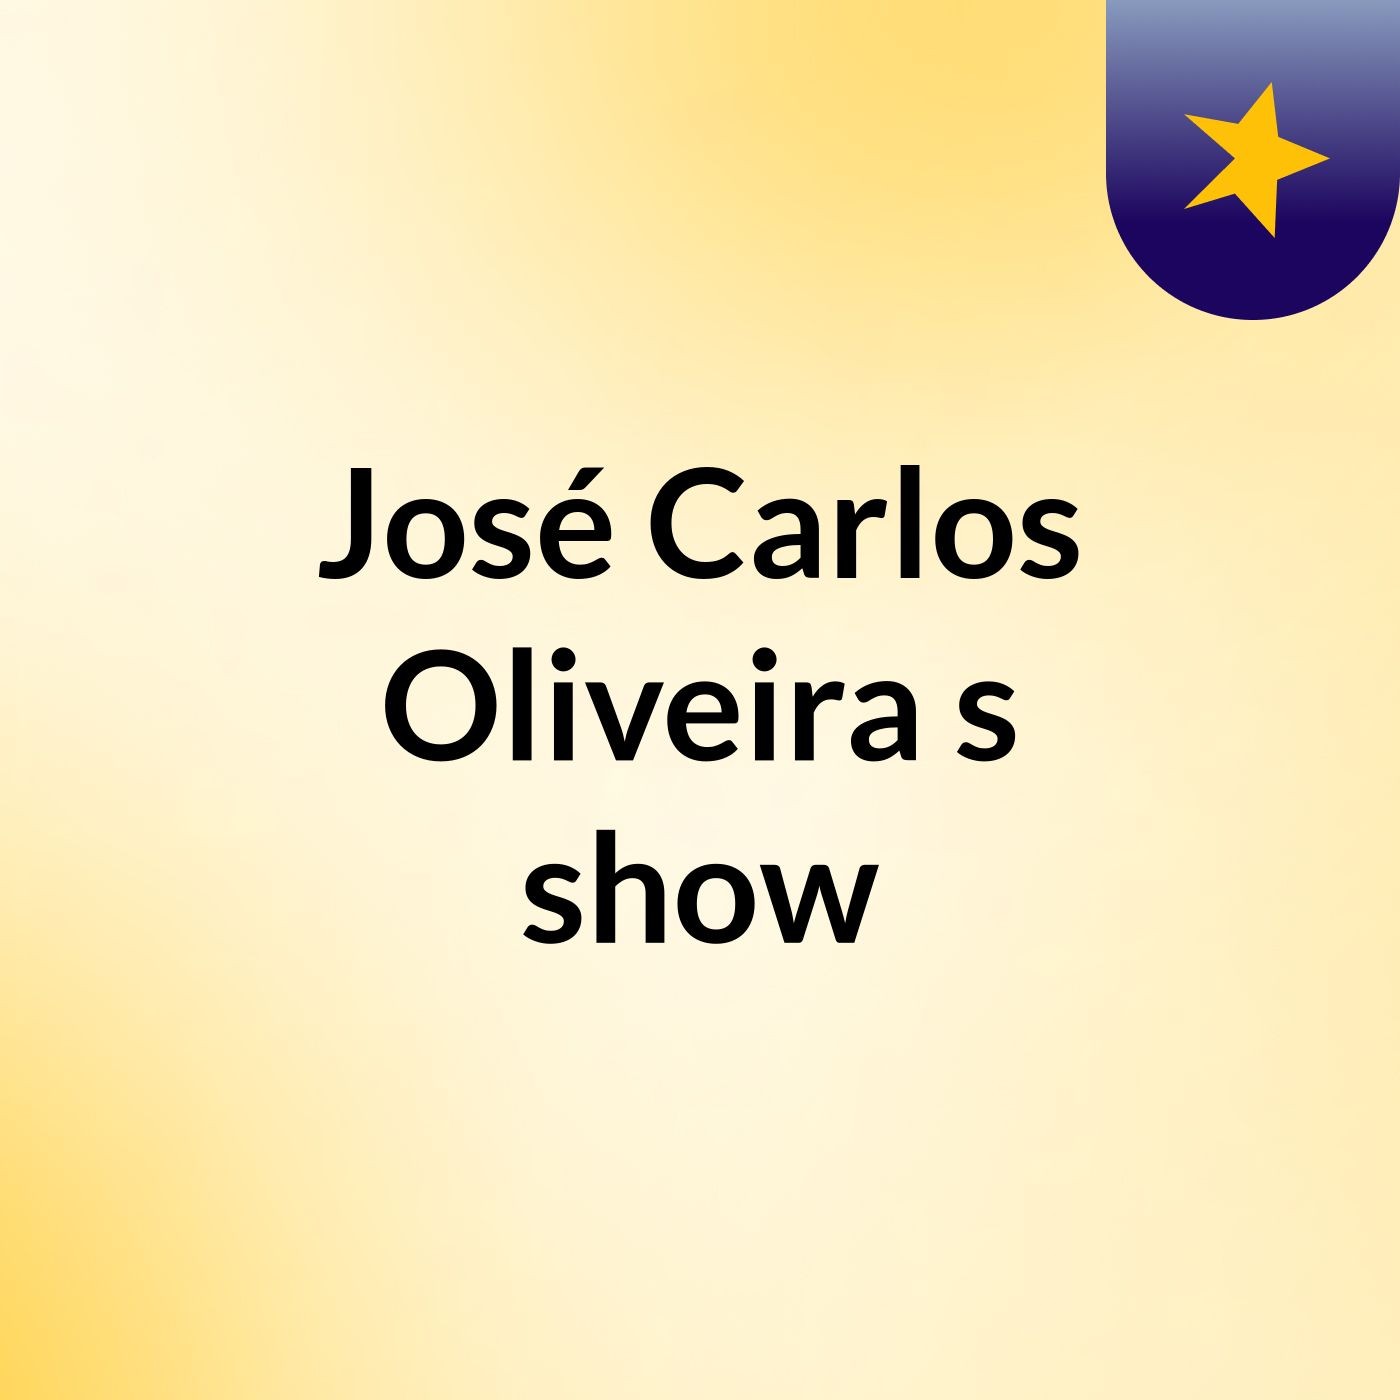 José Carlos Oliveira's show